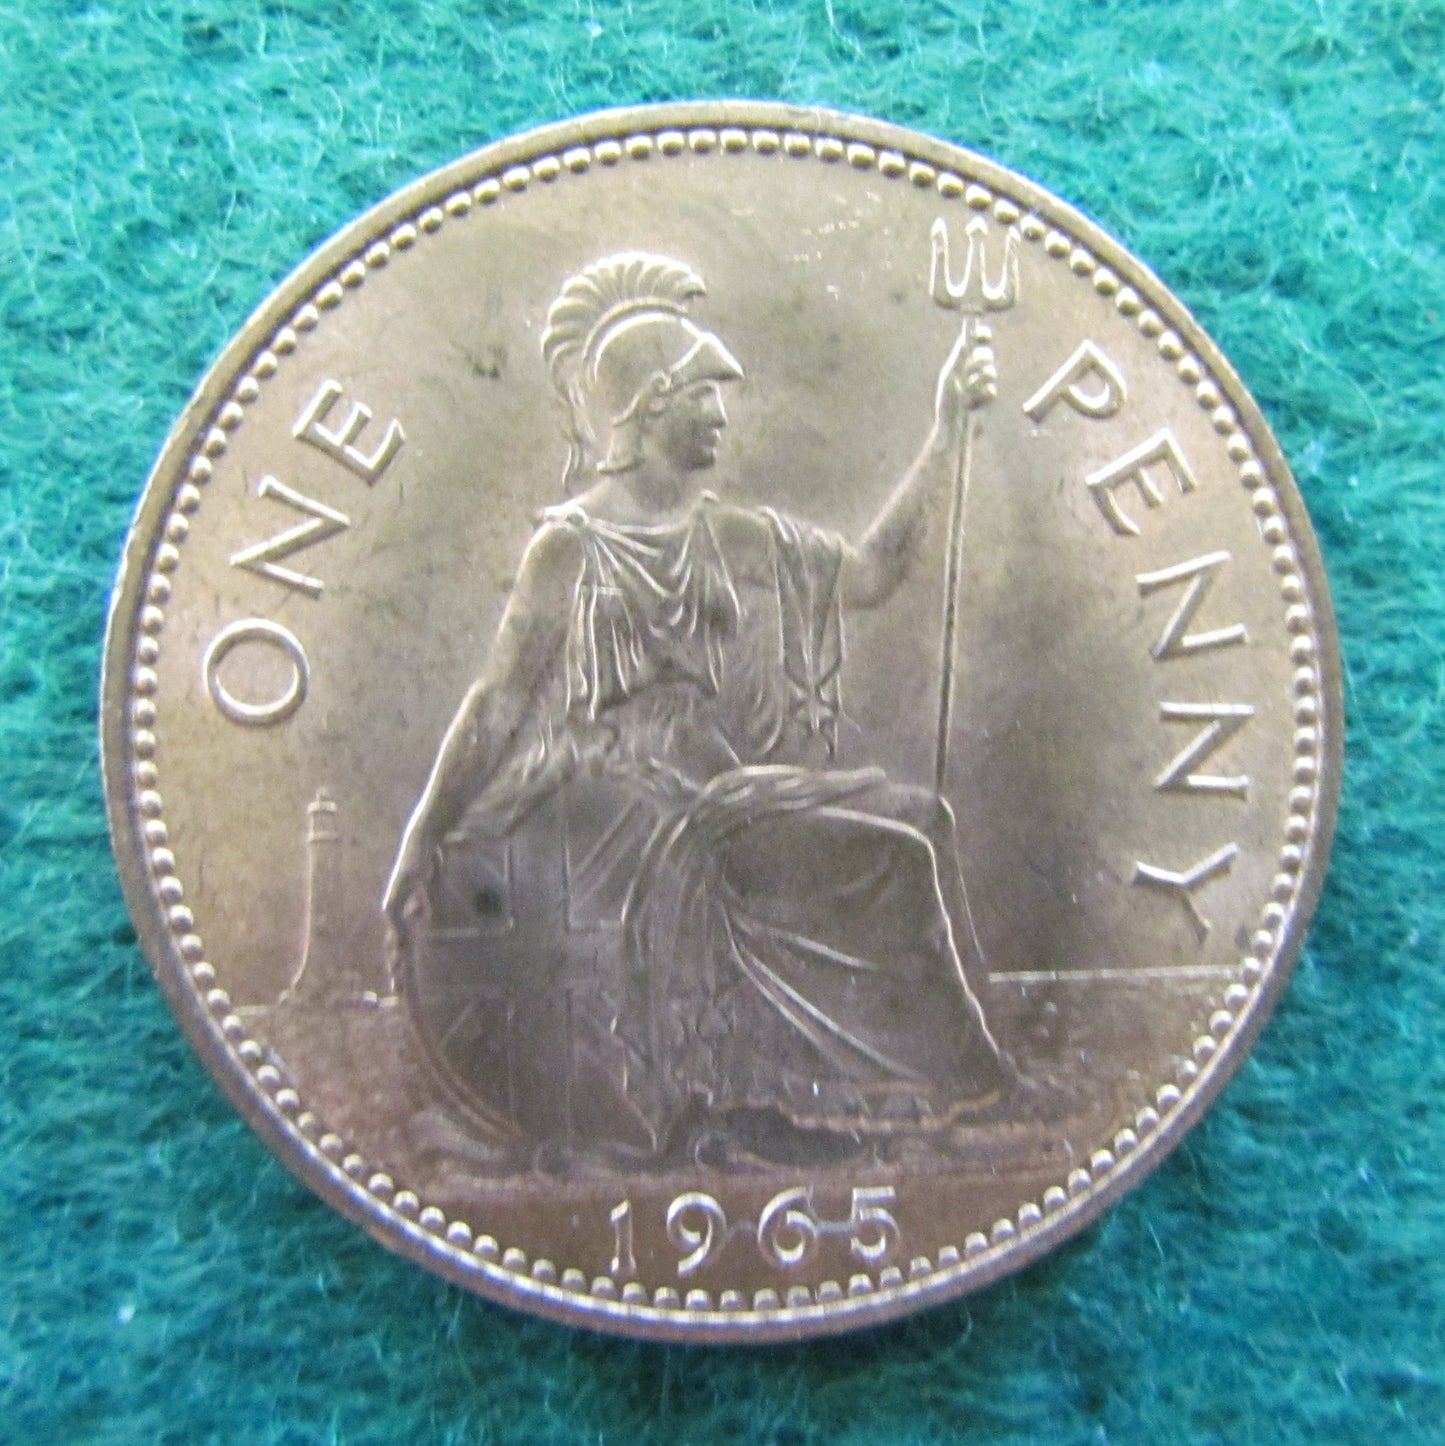 GB British UK English 1965 Penny Queen Elizabeth II Coin